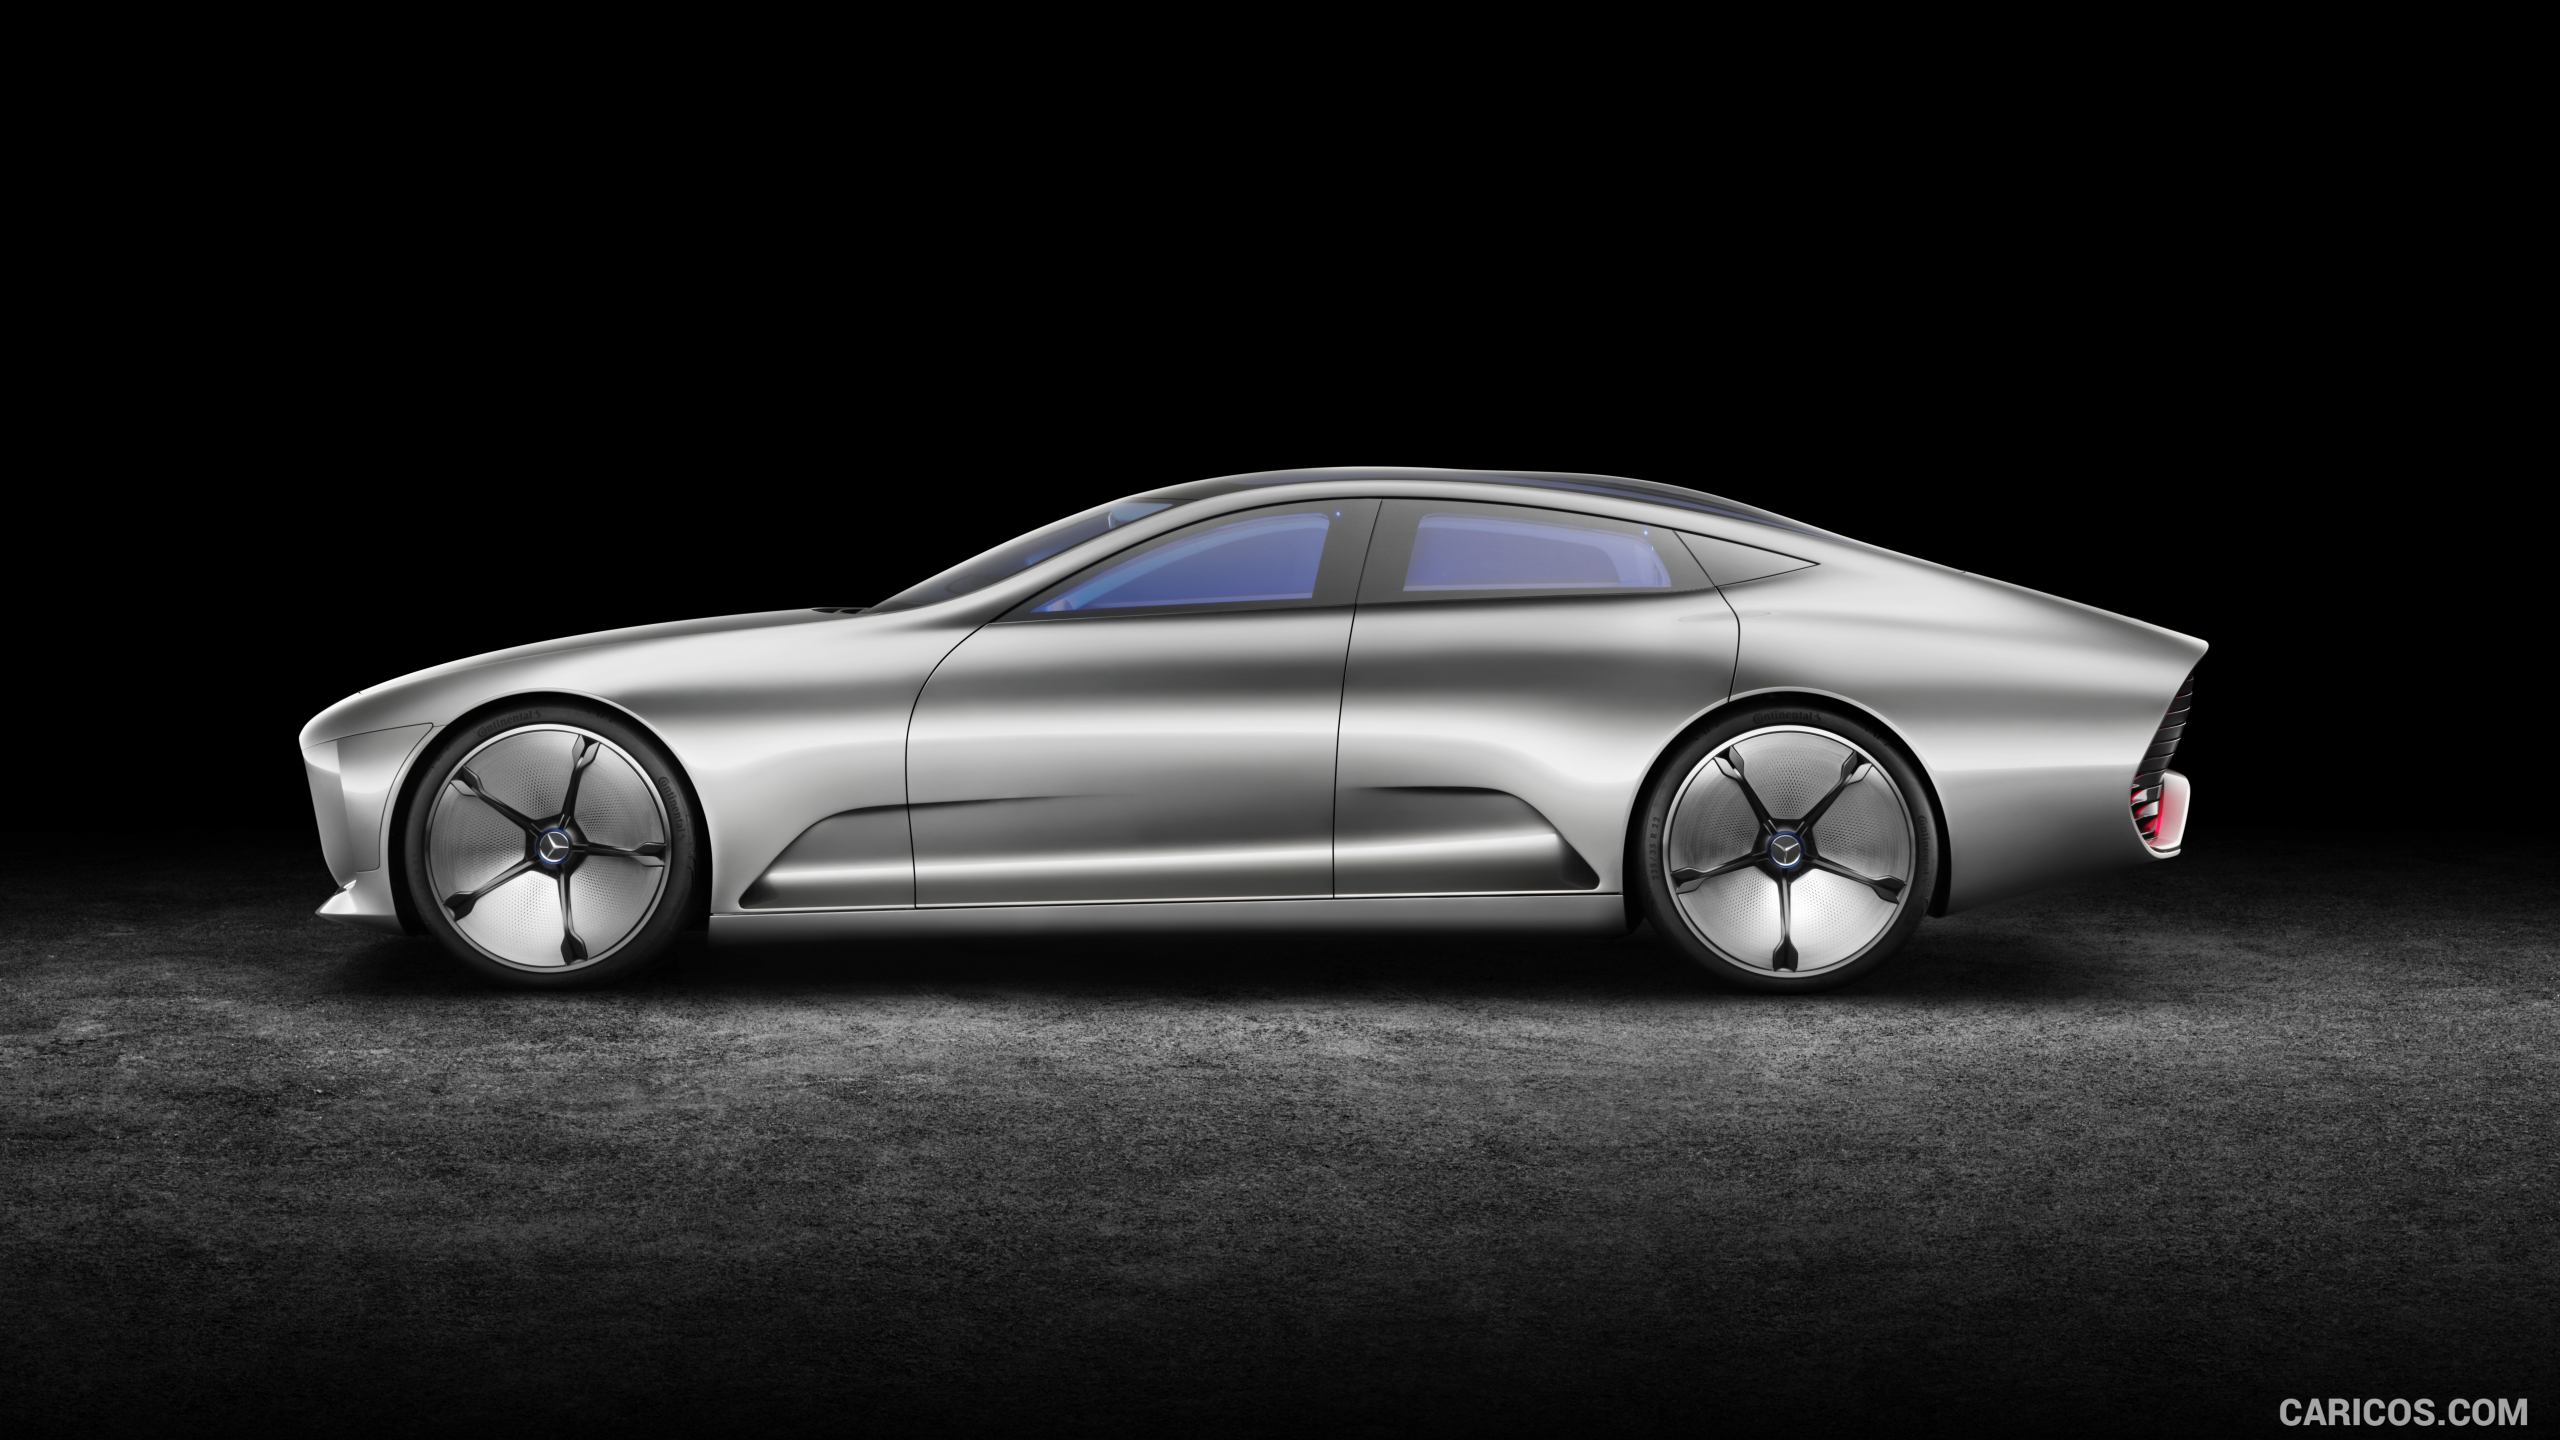 2015 Mercedes-Benz Concept IAA (Intelligent Aerodynamic Automobile) - Side, #22 of 49